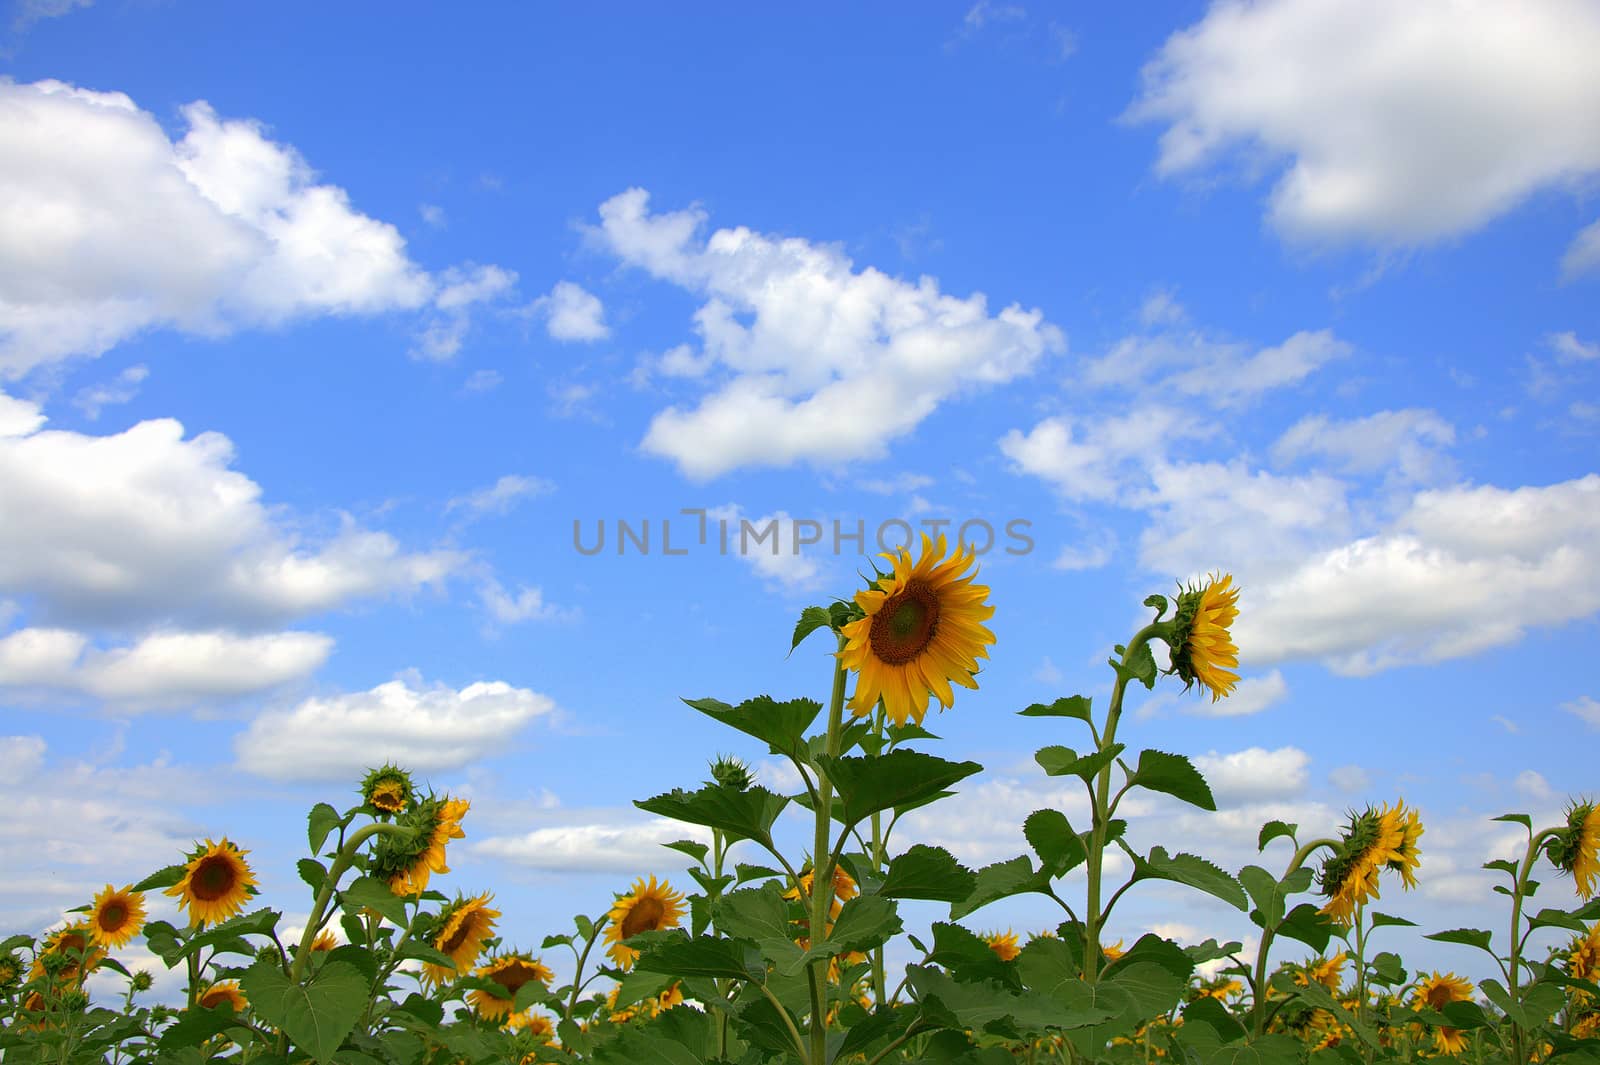 Ripe sunflower flowers under a blue cloudy sky.